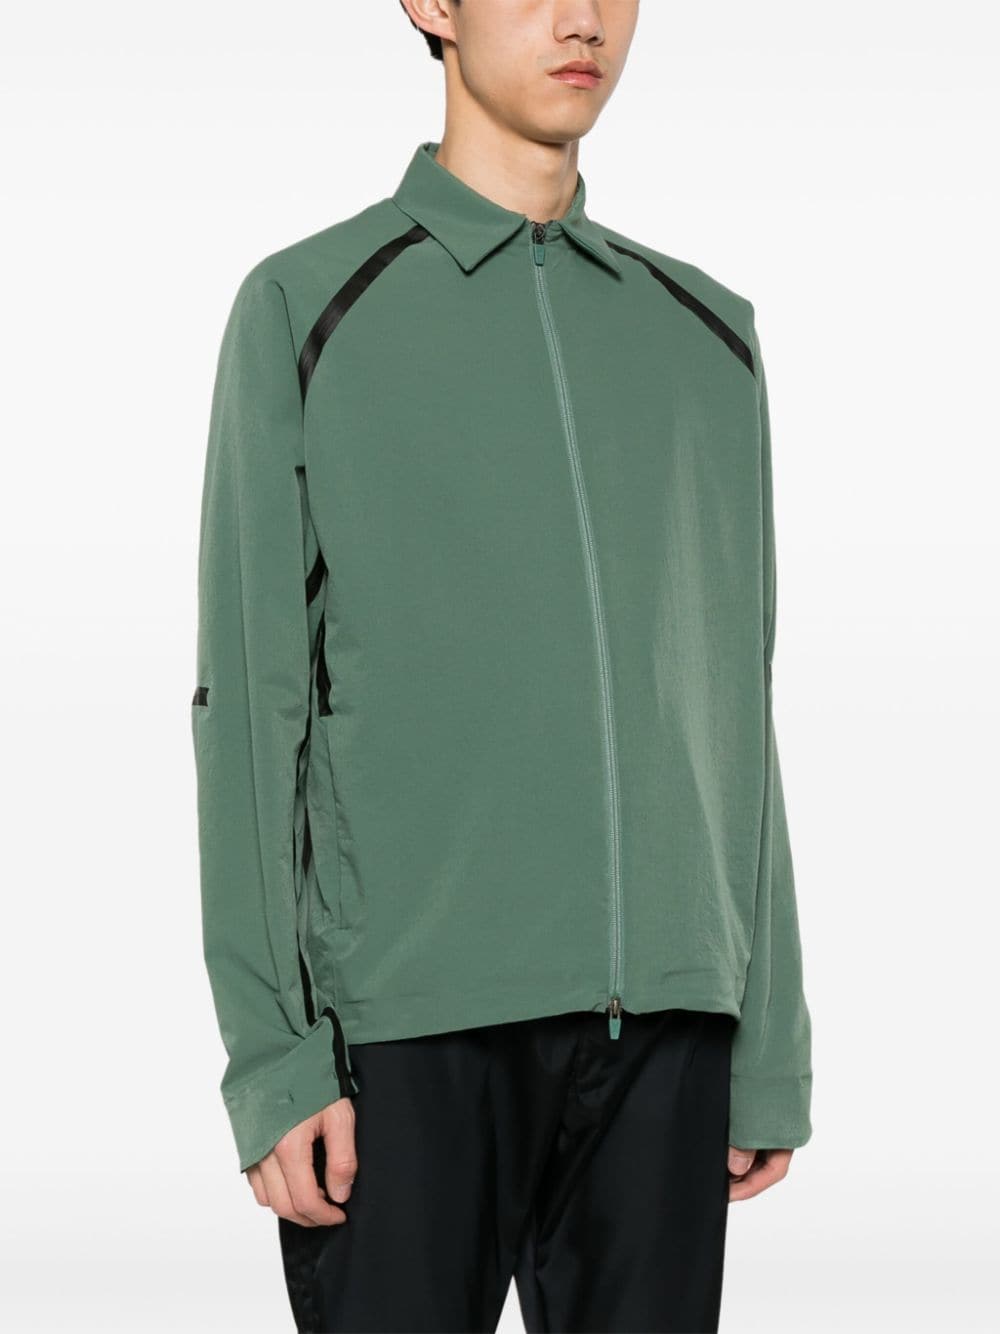 Ripstock-texture shirt jacket<BR/>